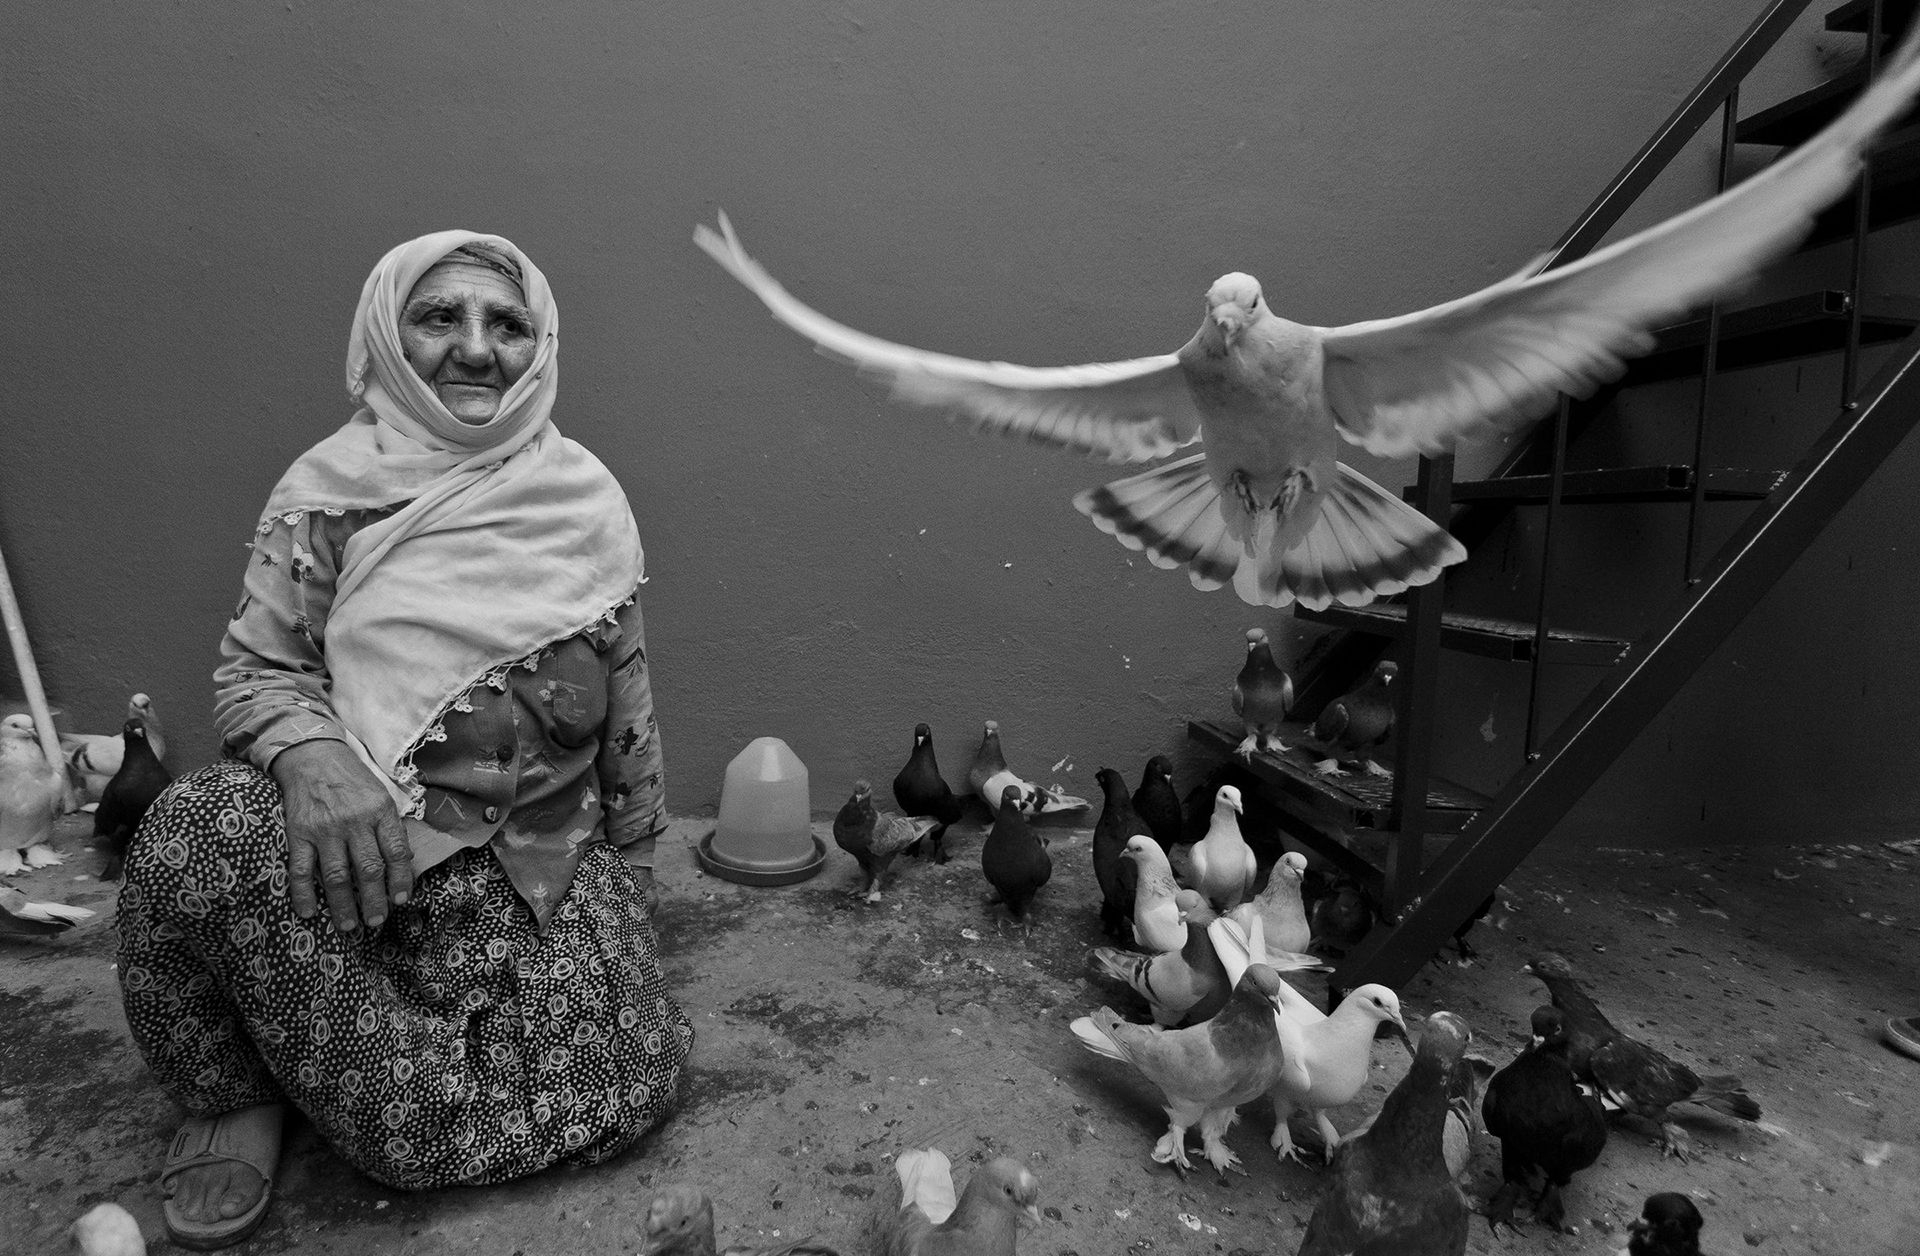 Photograph by Ali Aşılı, National Geographic